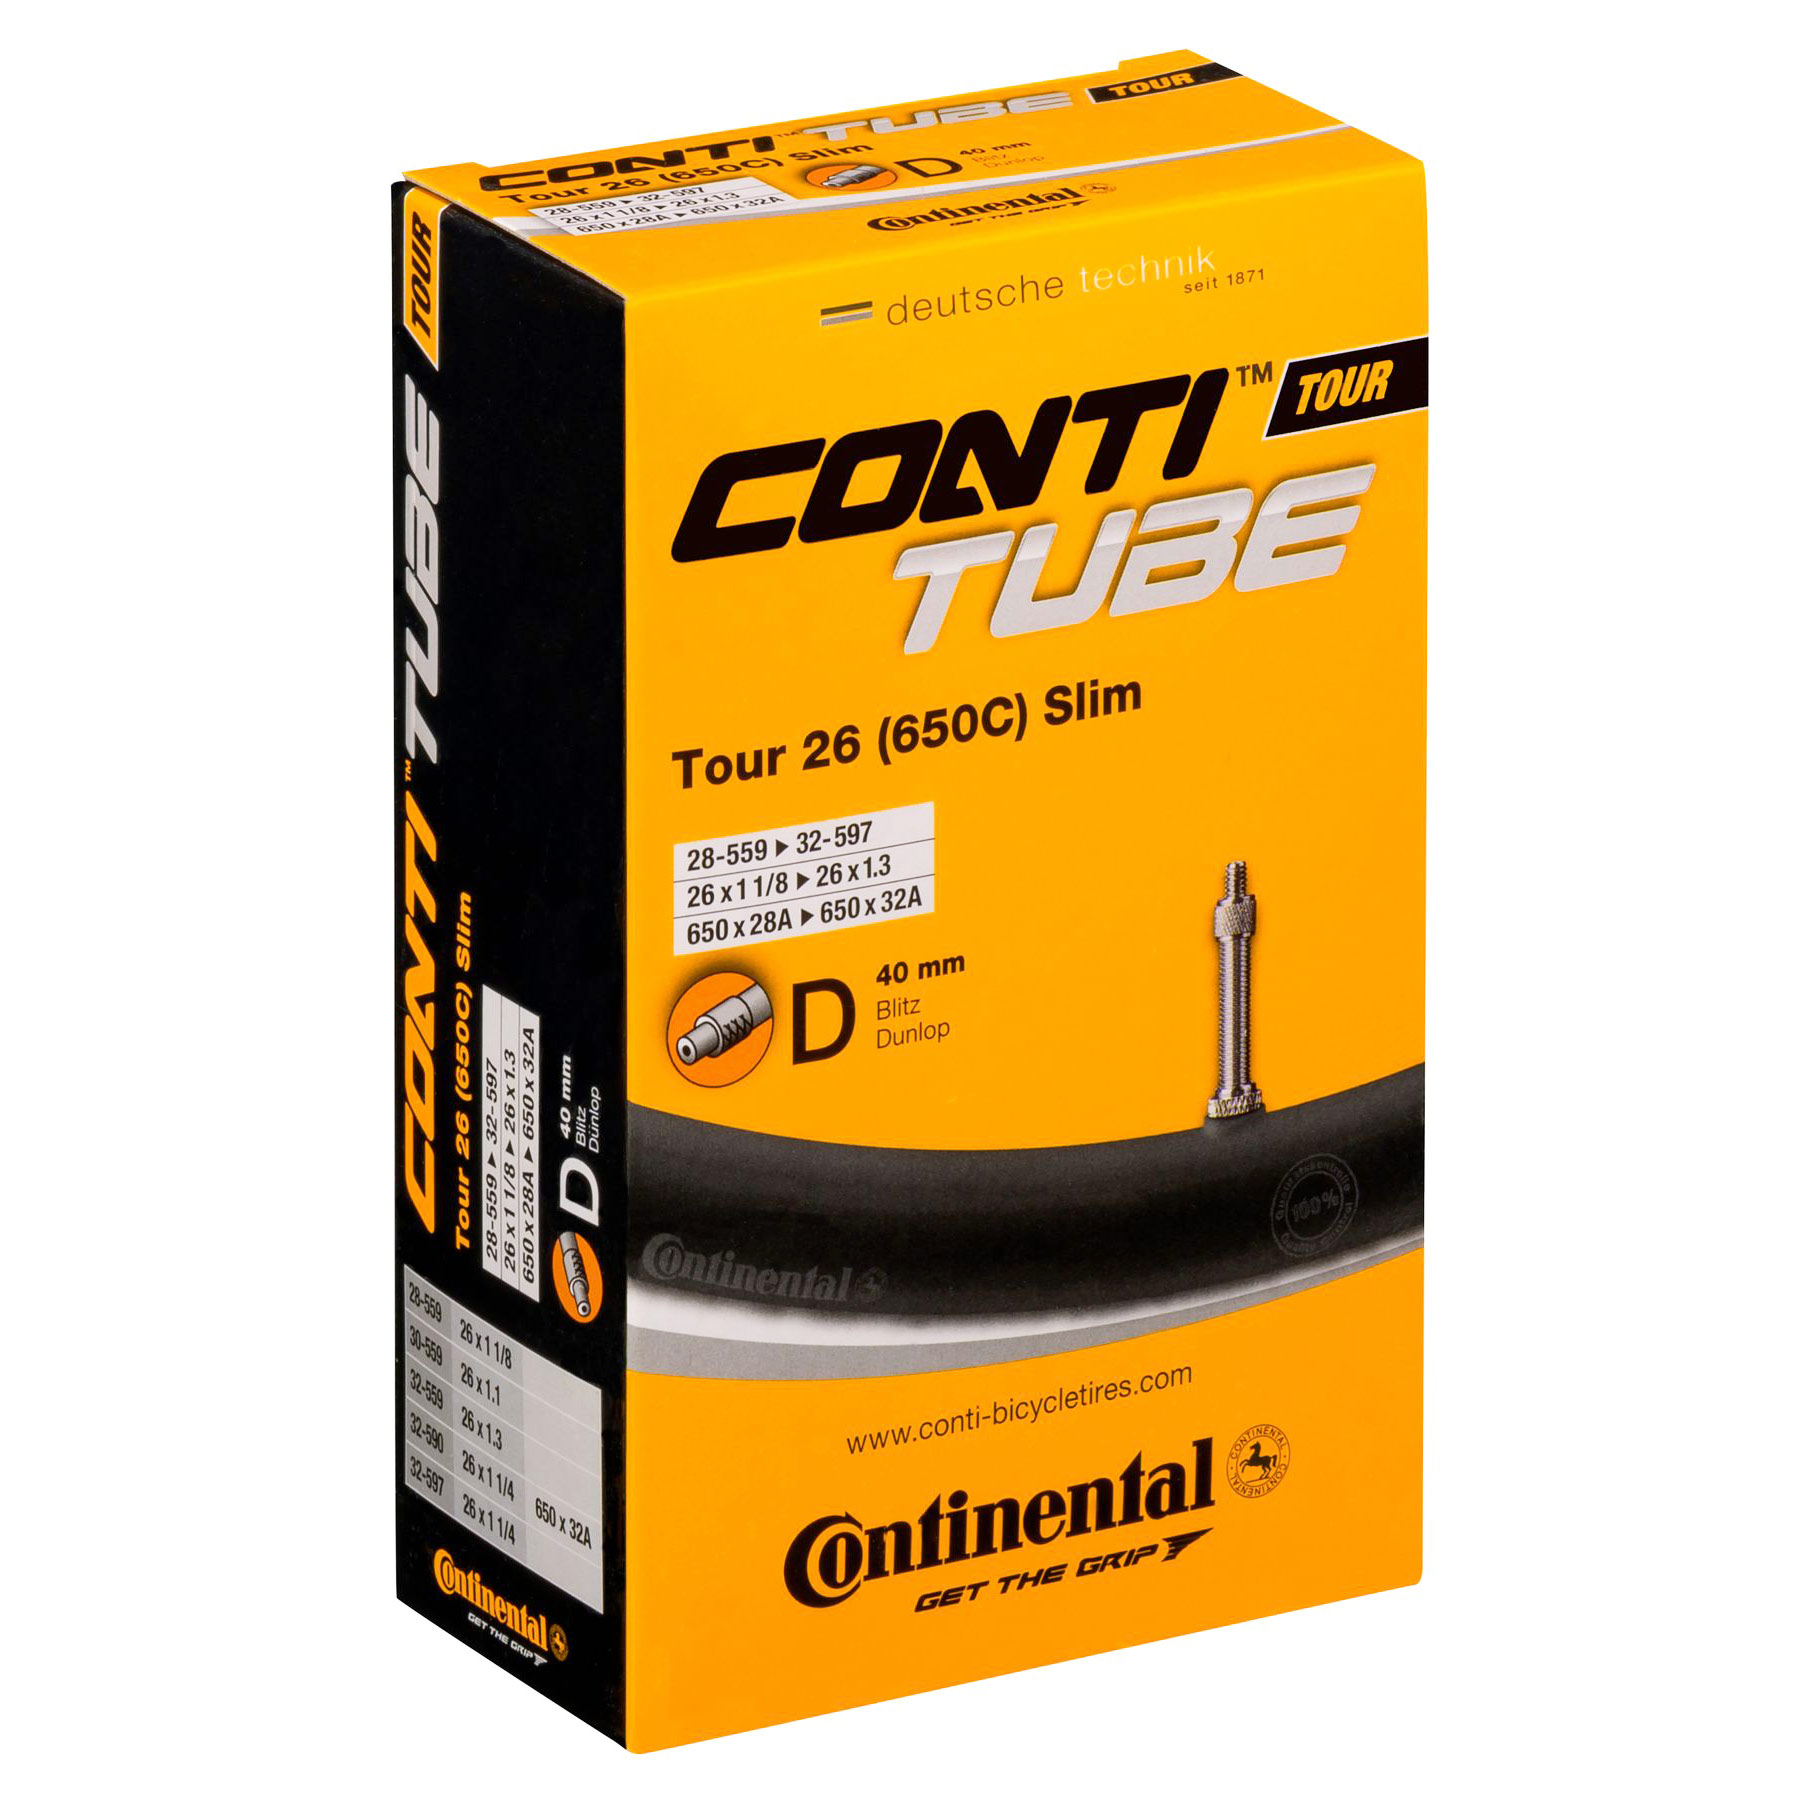 Productfoto van Continental Tour 26 Slim Tube